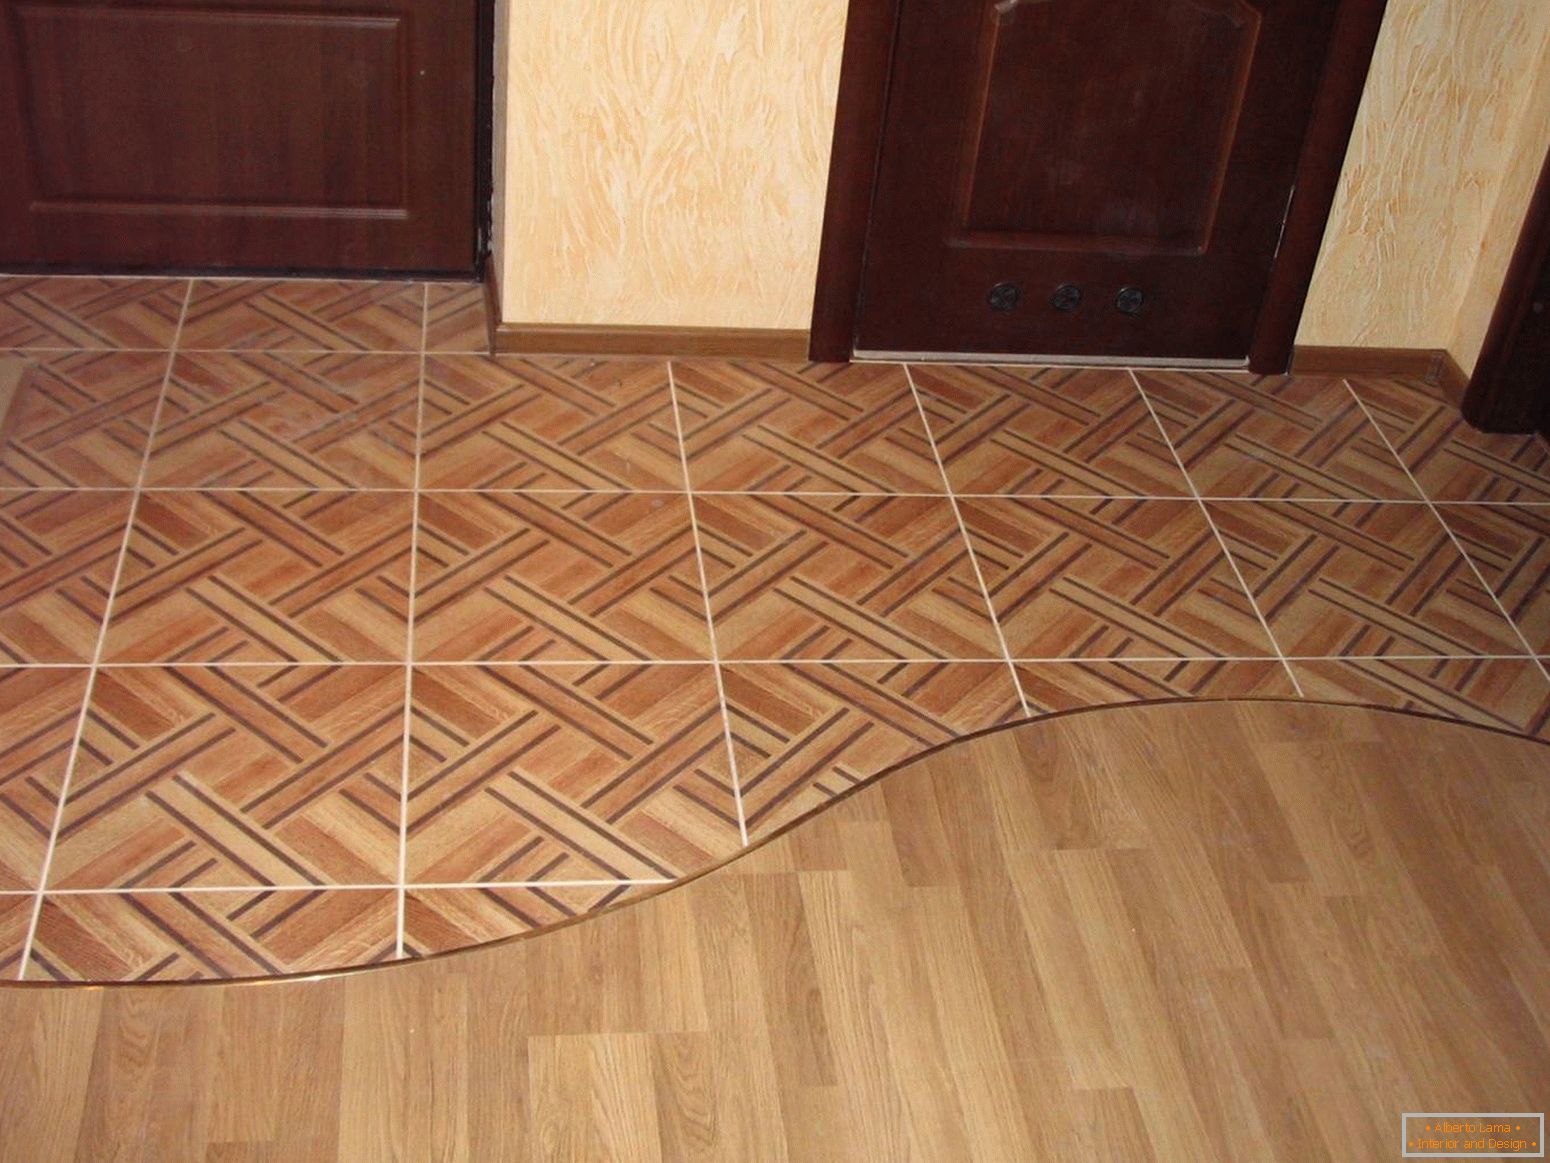 Combination of floor coverings